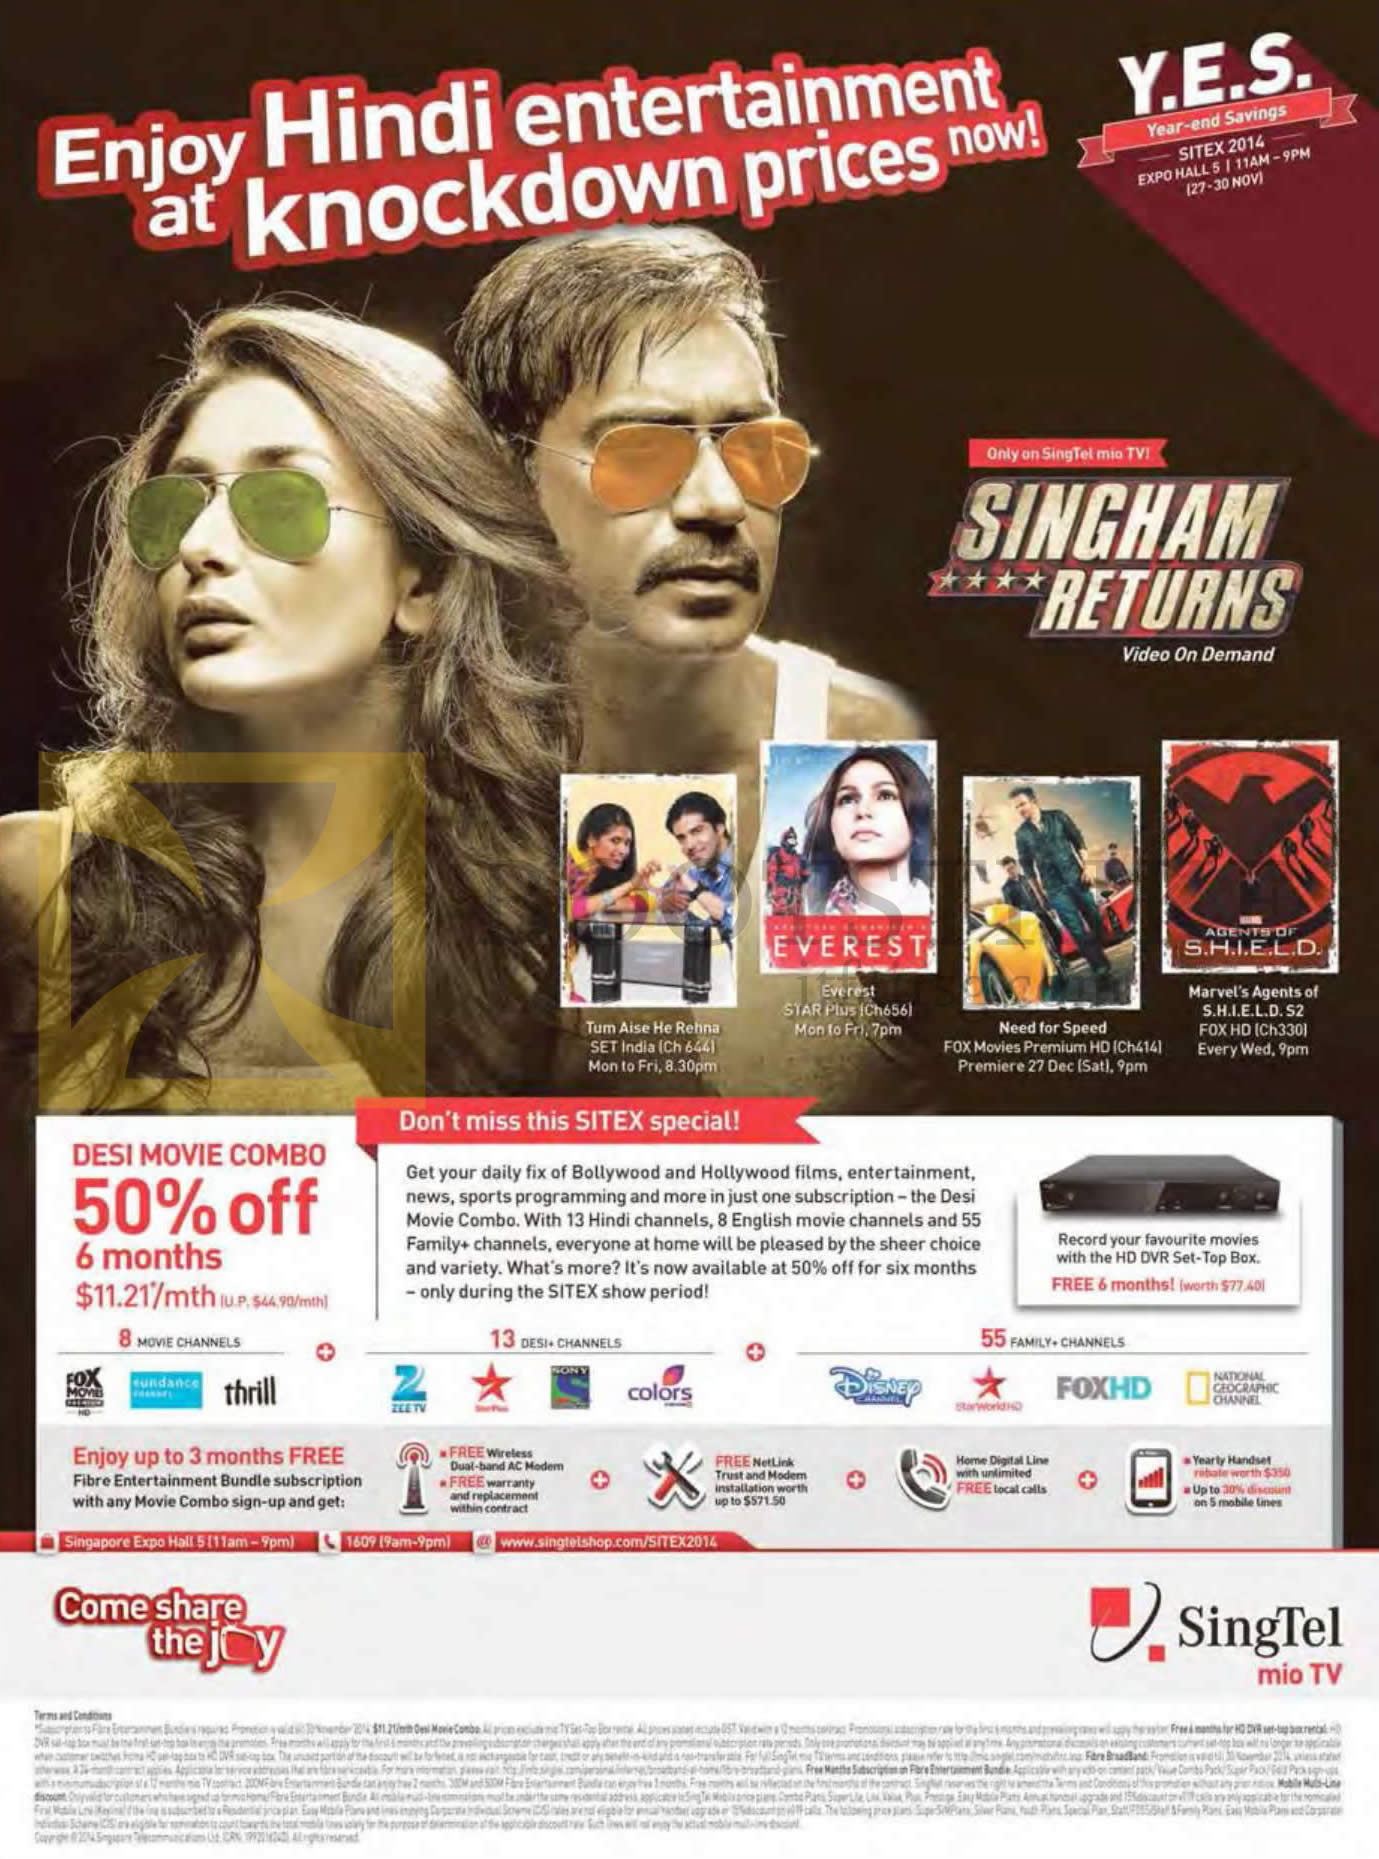 SITEX 2014 price list image brochure of Singtel Mio TV Desi Movie Combo